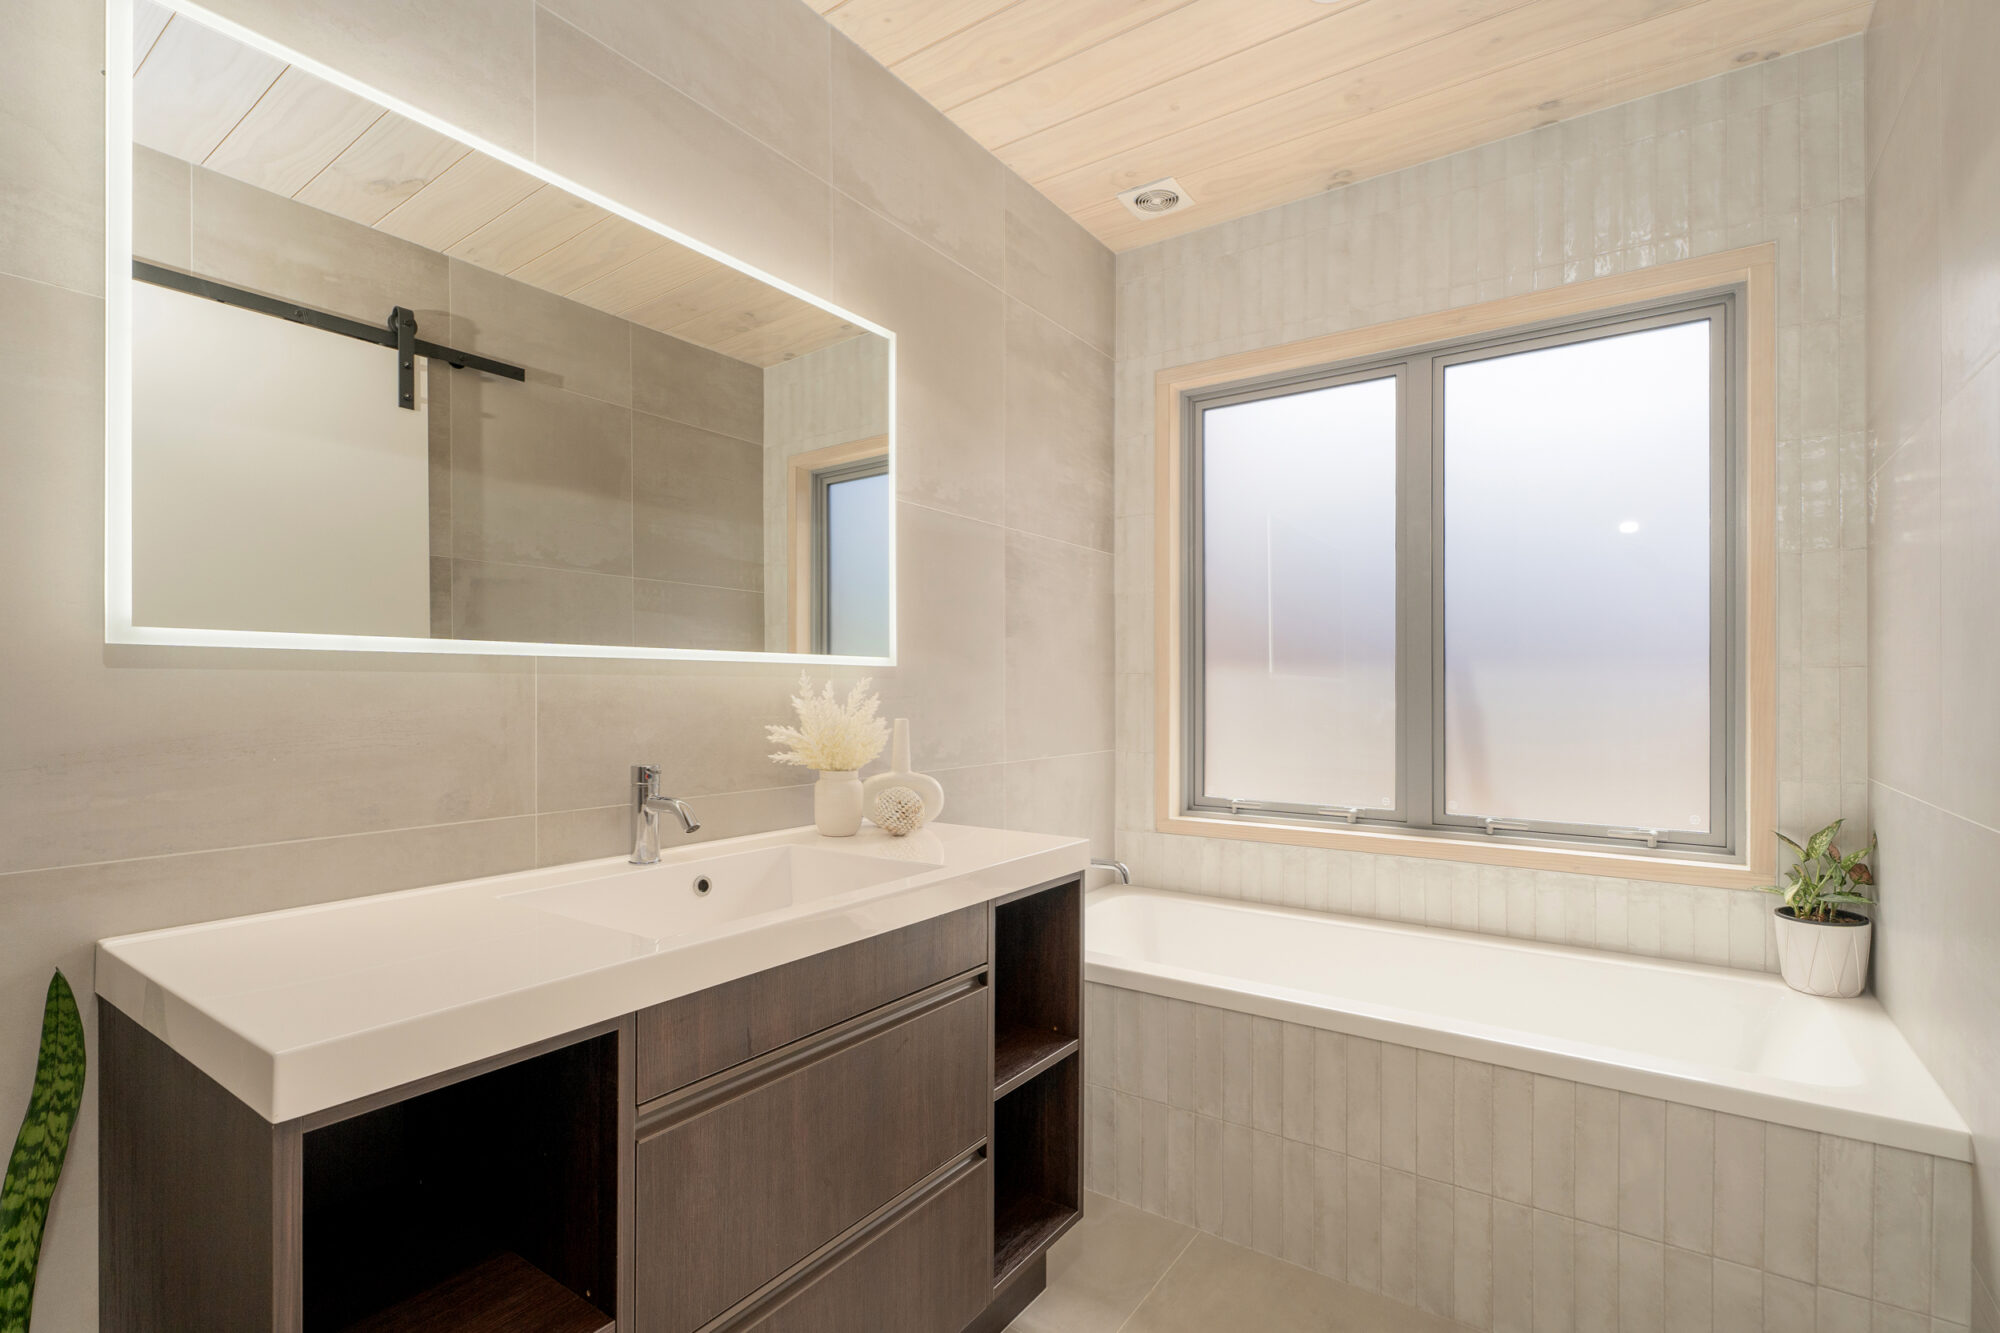 Timber Tiled Bathroom